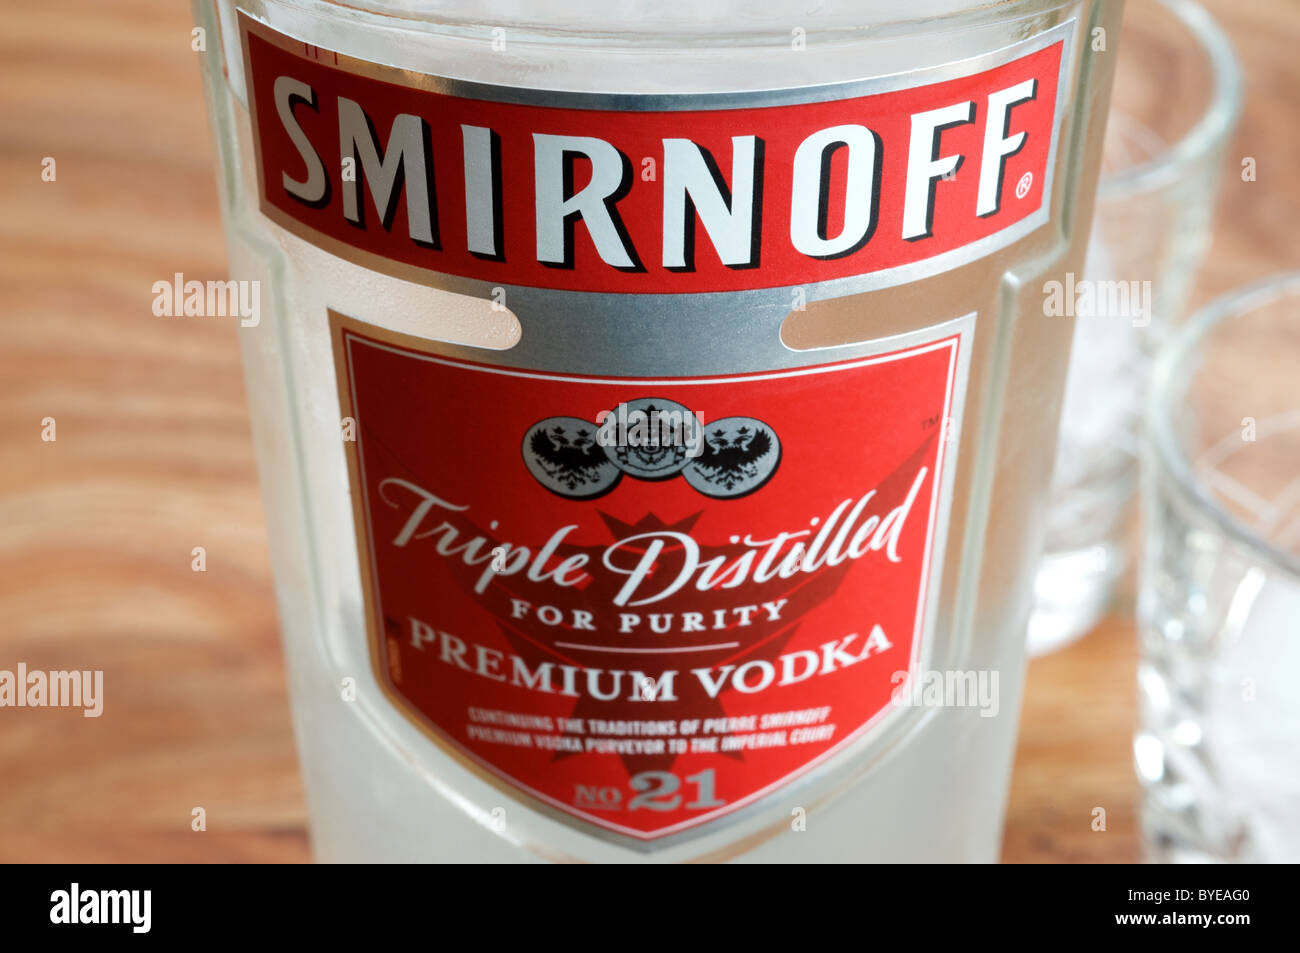 Smirnoff triple distillata vodka premium Foto Stock